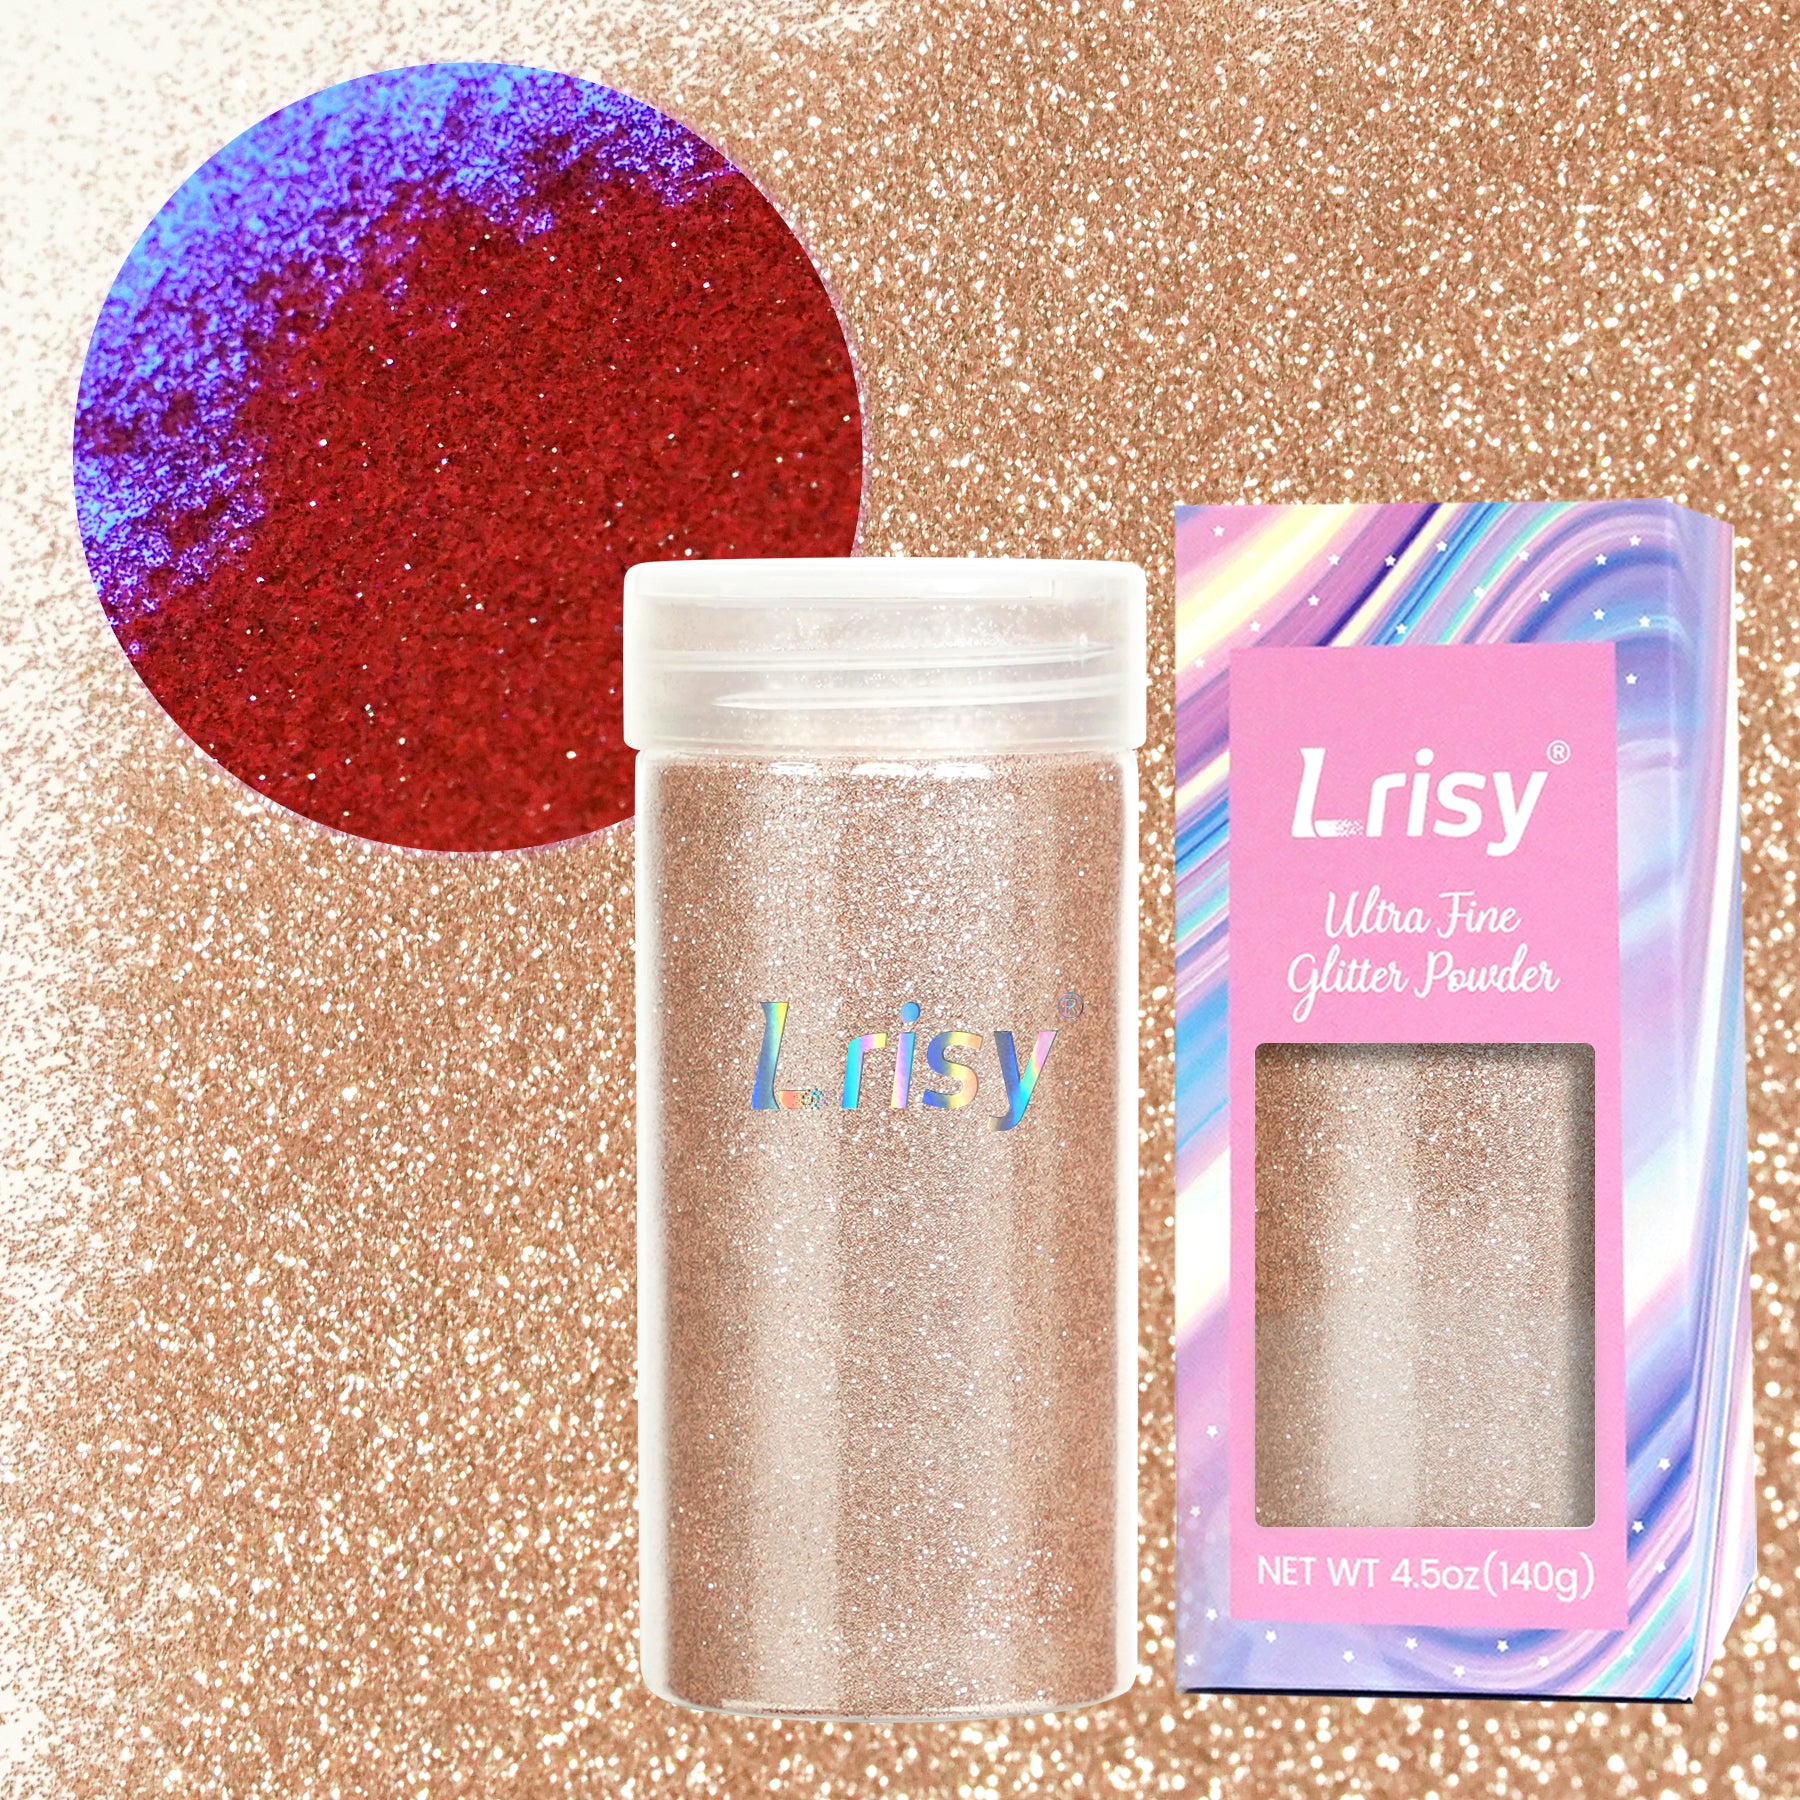 Lrisy Extra Fine Neon Punk Metallic Glitter Powder with Shaker Lid 140g/4.5oz(Punk Bright Rose Gold)